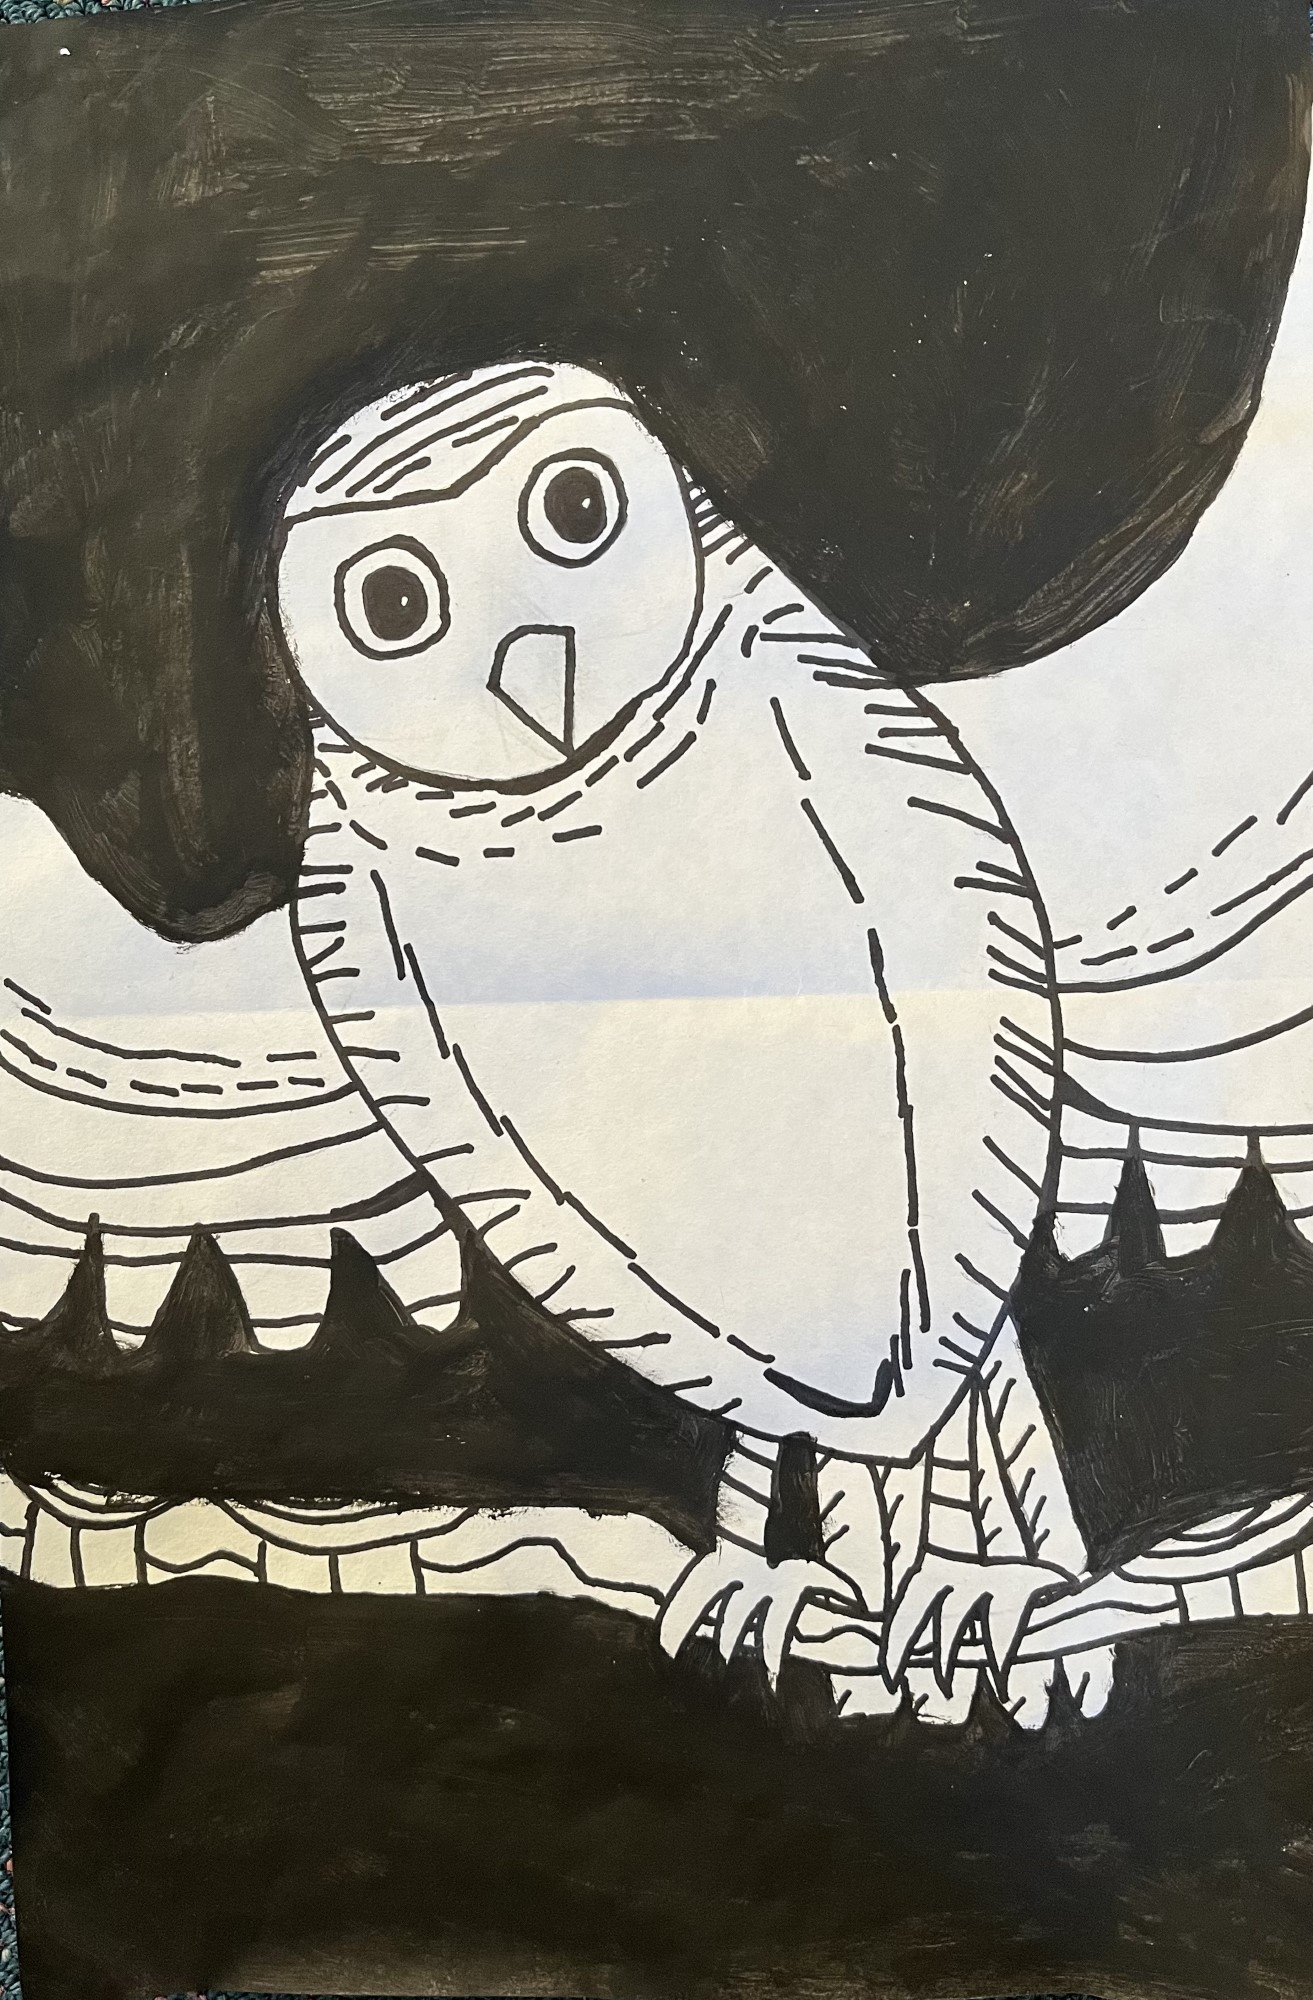 student artwork - Night owl